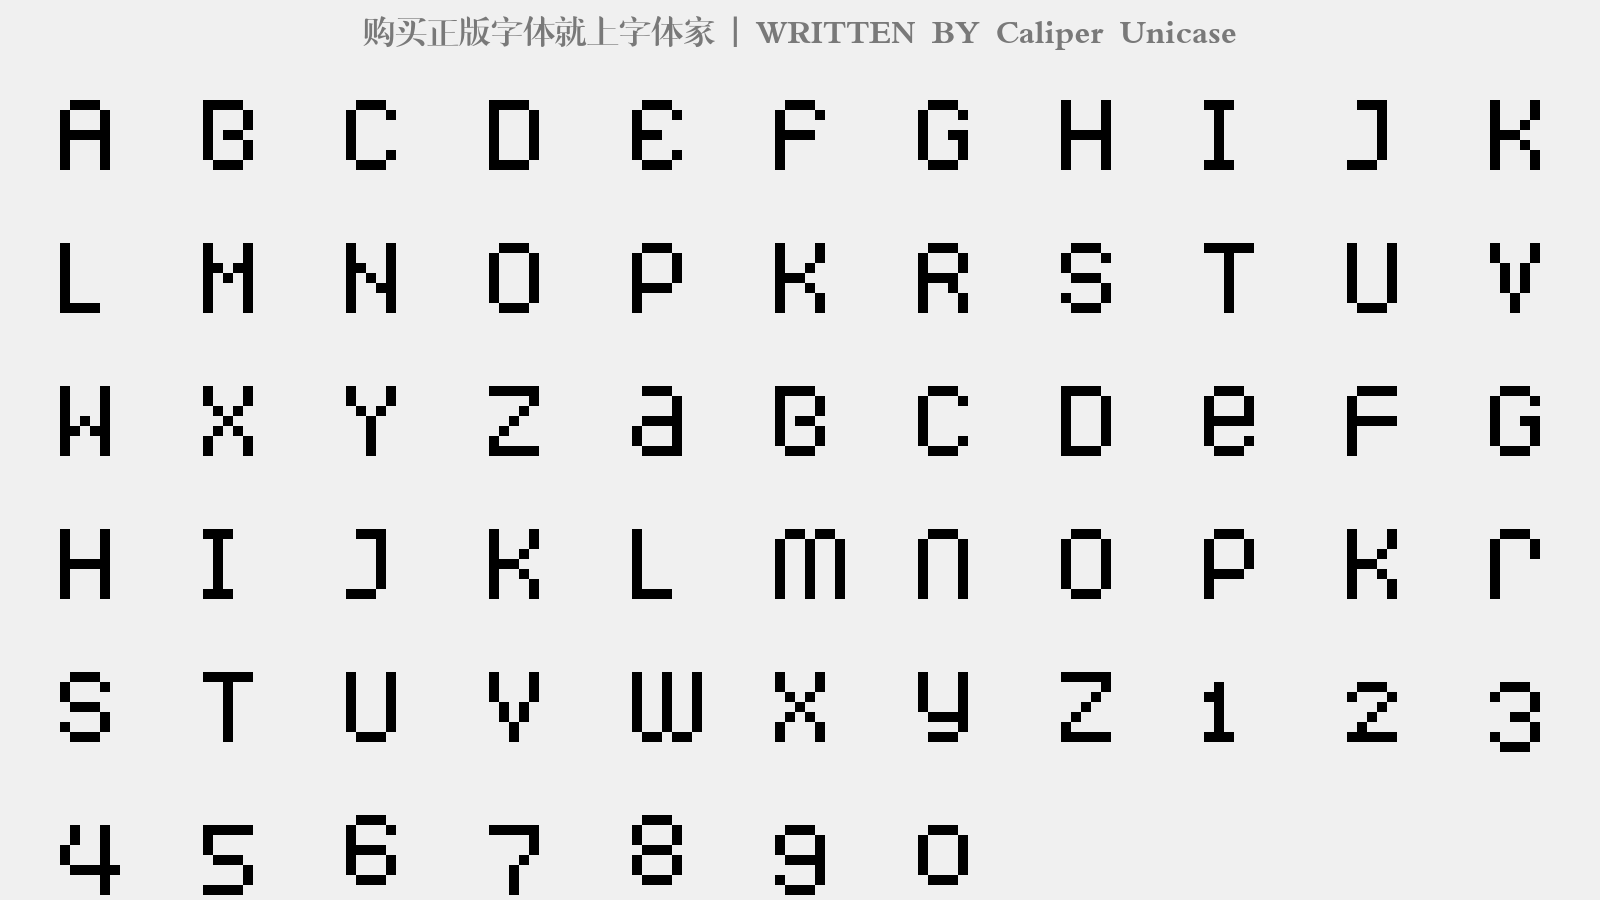 Caliper Unicase - 大写字母/小写字母/数字